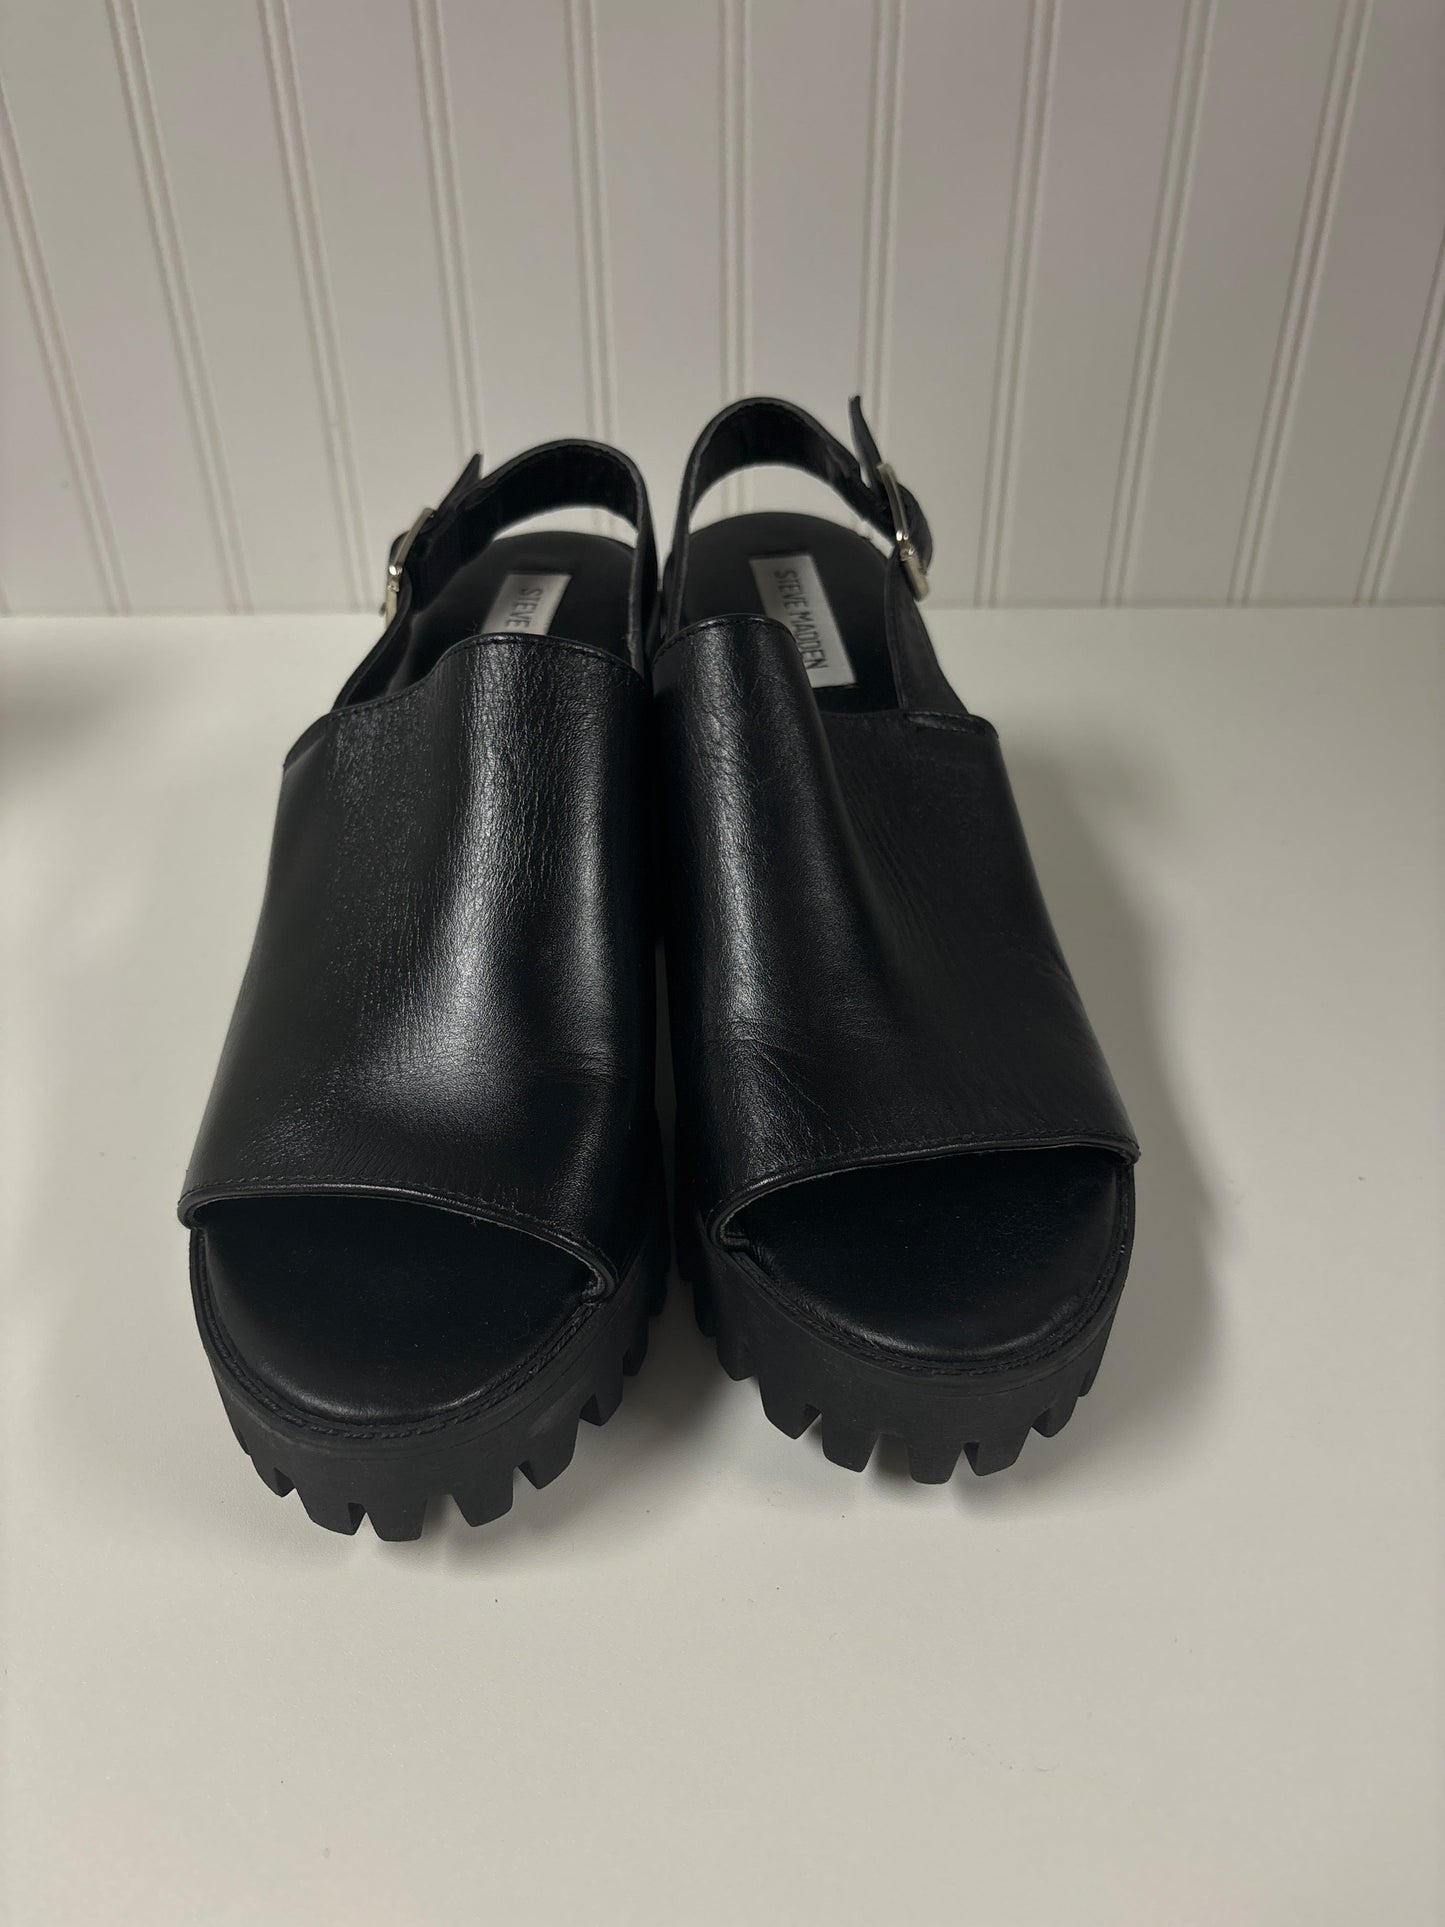 Sandals Heels Block By Steve Madden  Size: 10